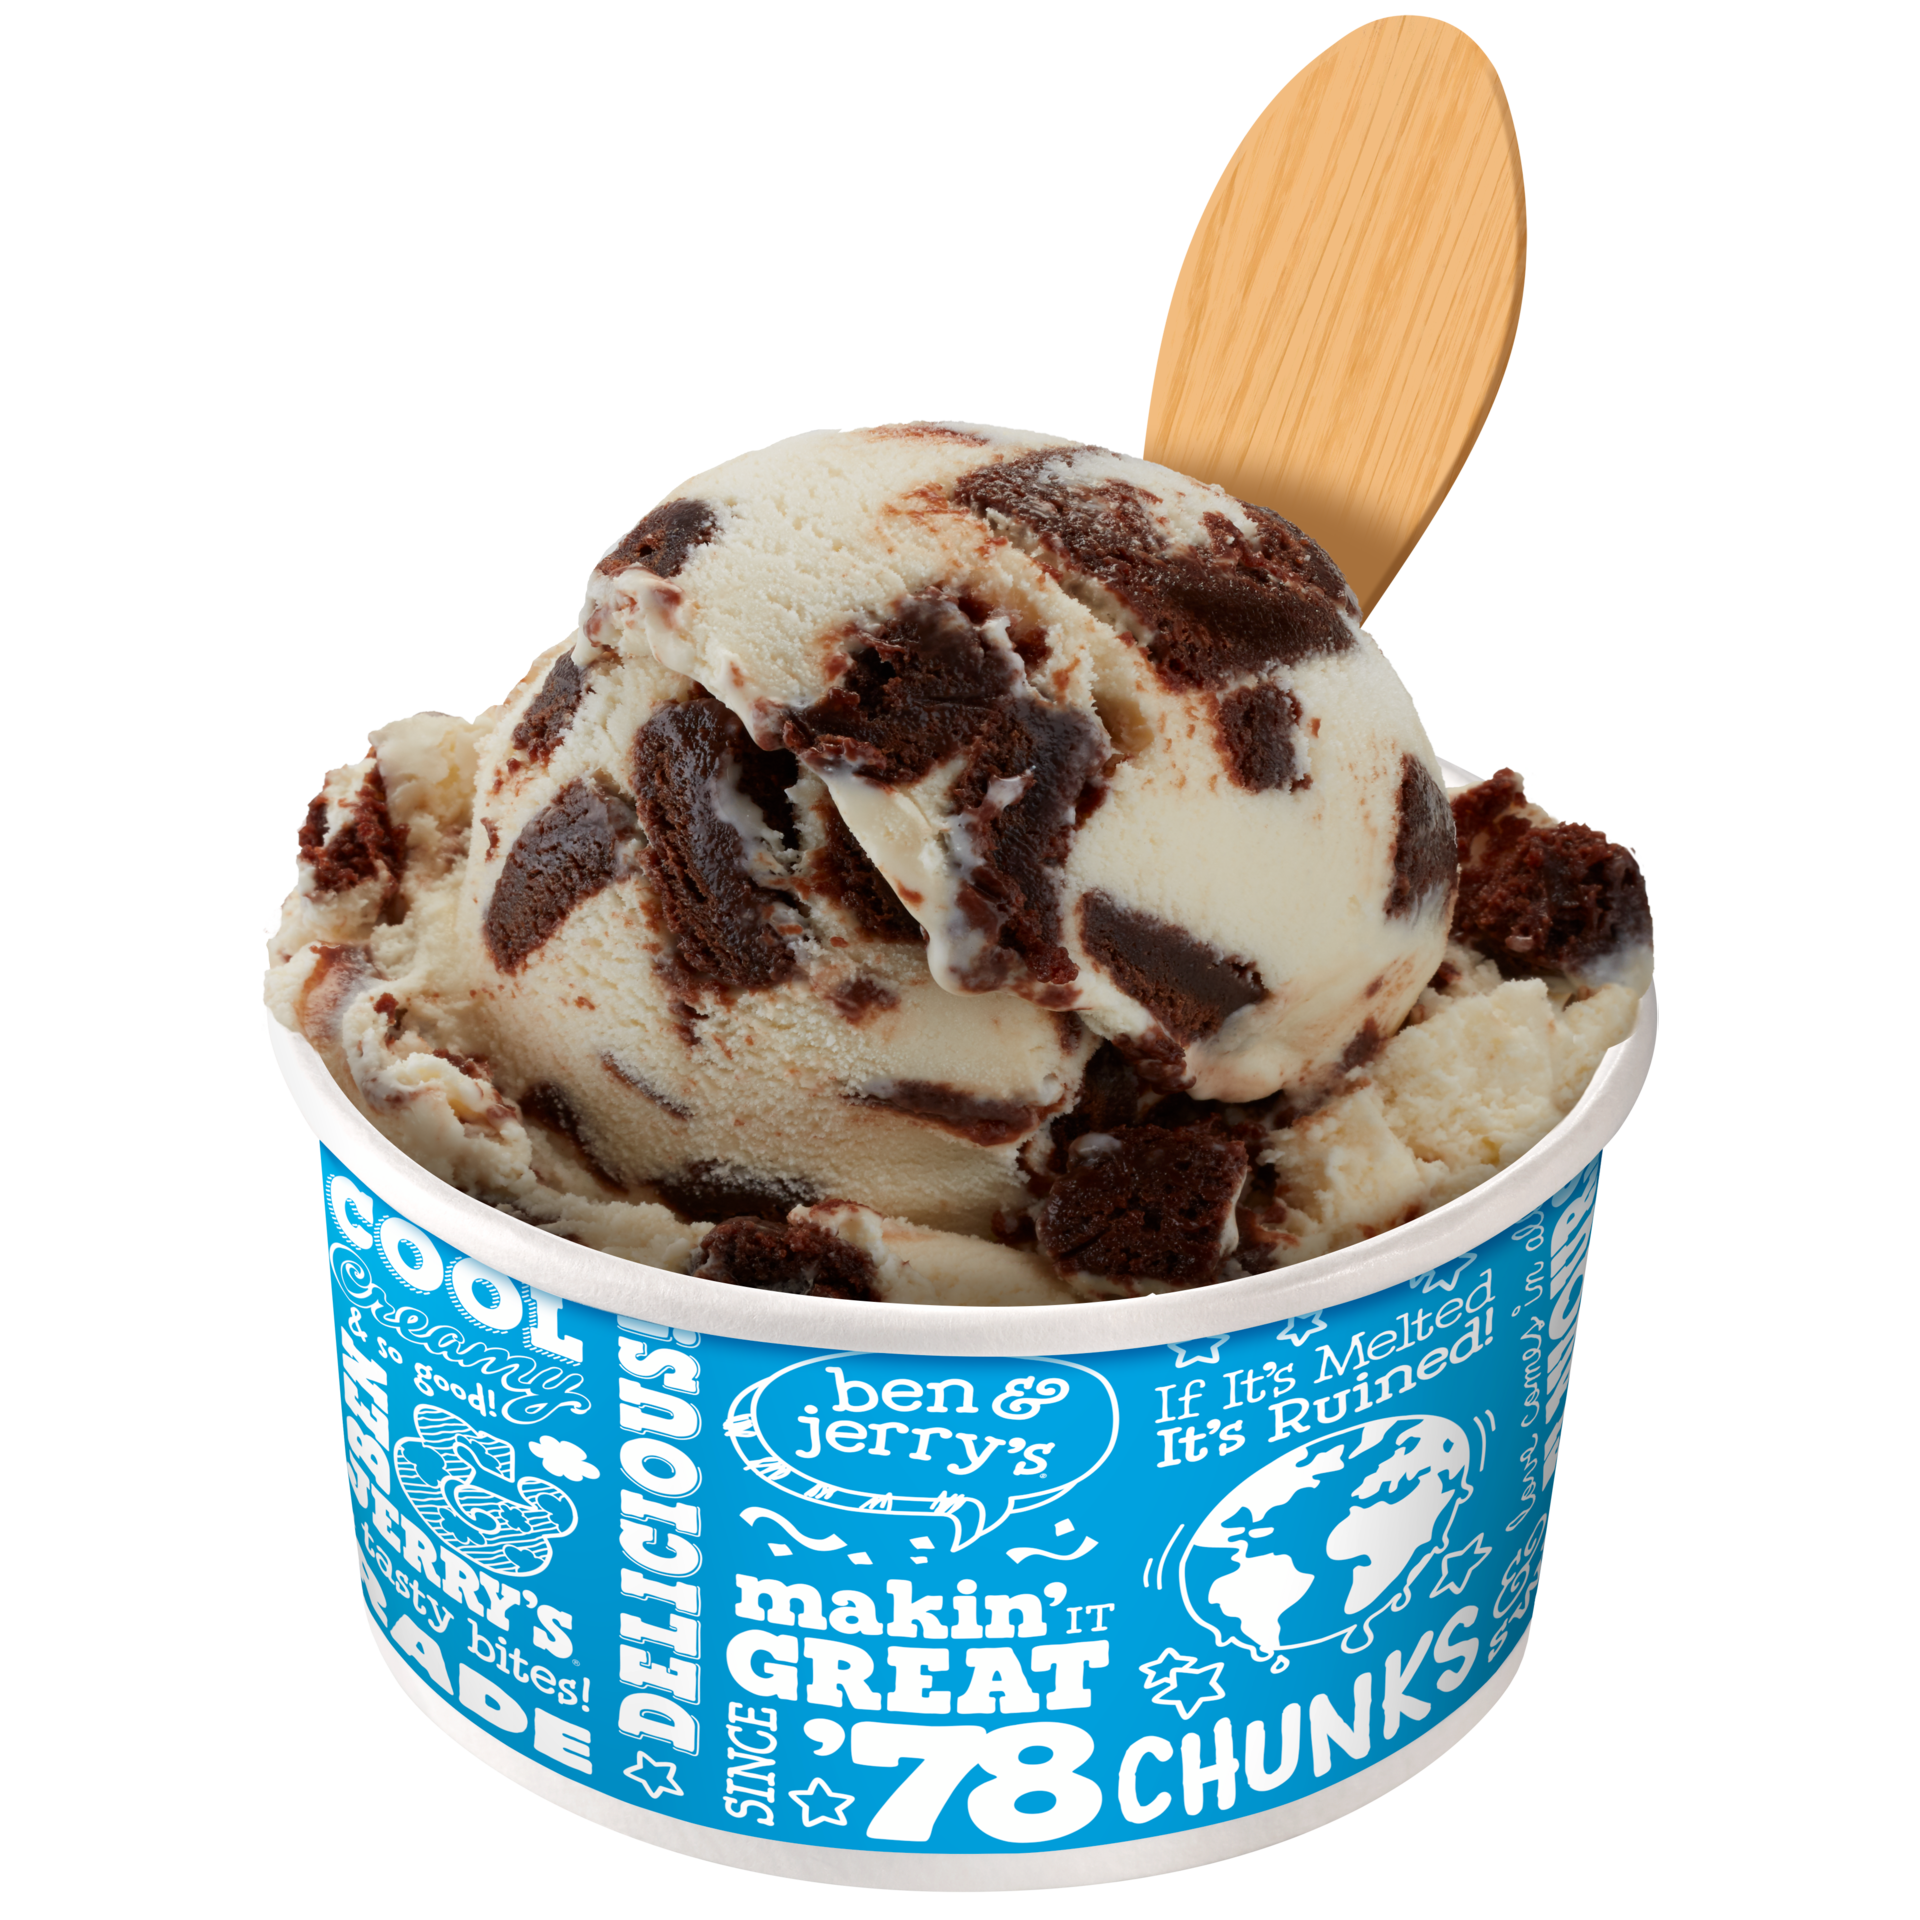 Mint Chocolate Chance™ Original Ice Cream Scoop Shops